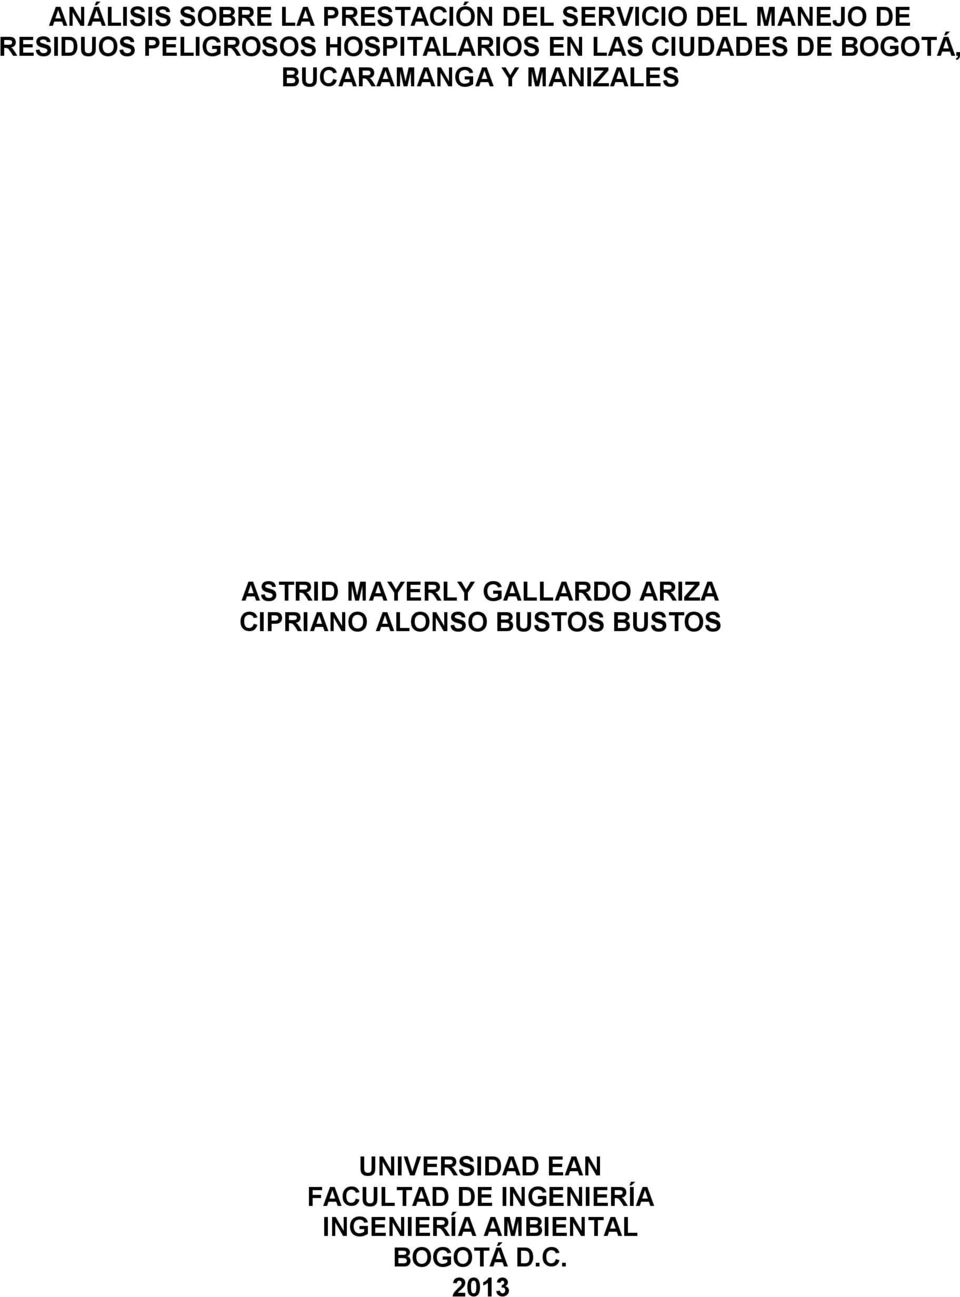 MANIZALES ASTRID MAYERLY GALLARDO ARIZA CIPRIANO ALONSO BUSTOS BUSTOS